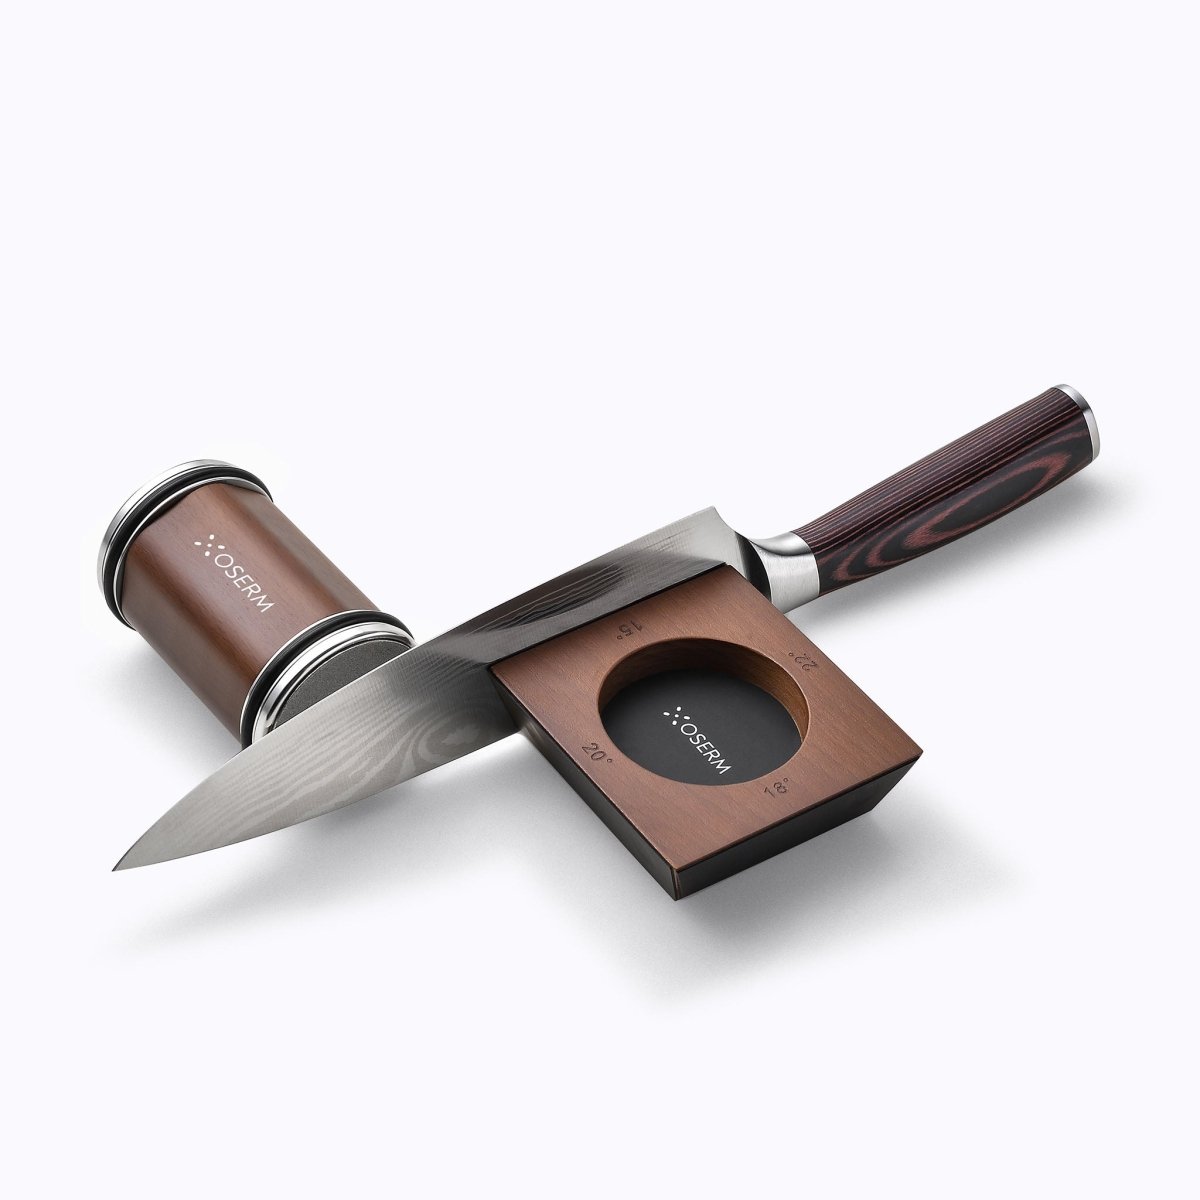 OSERM SwiftSharp Rolling Knife Sharpener